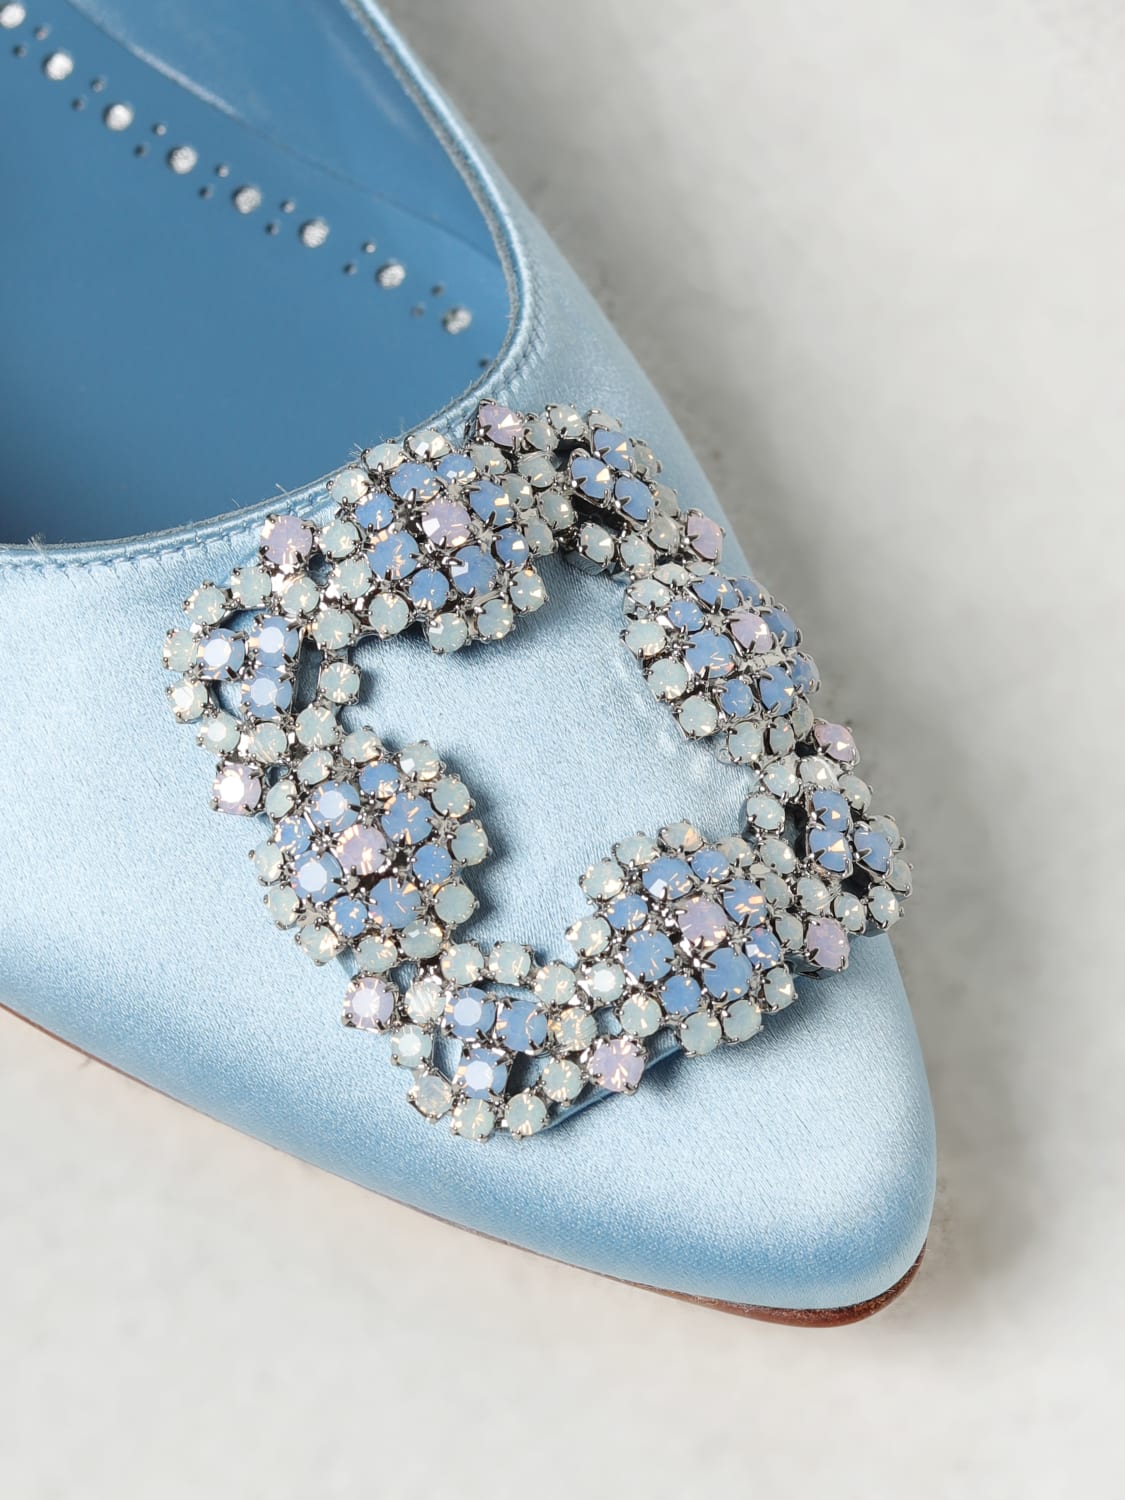 Manolo Blahnik Hangisi buckle-detail ballerina shoes - Blue